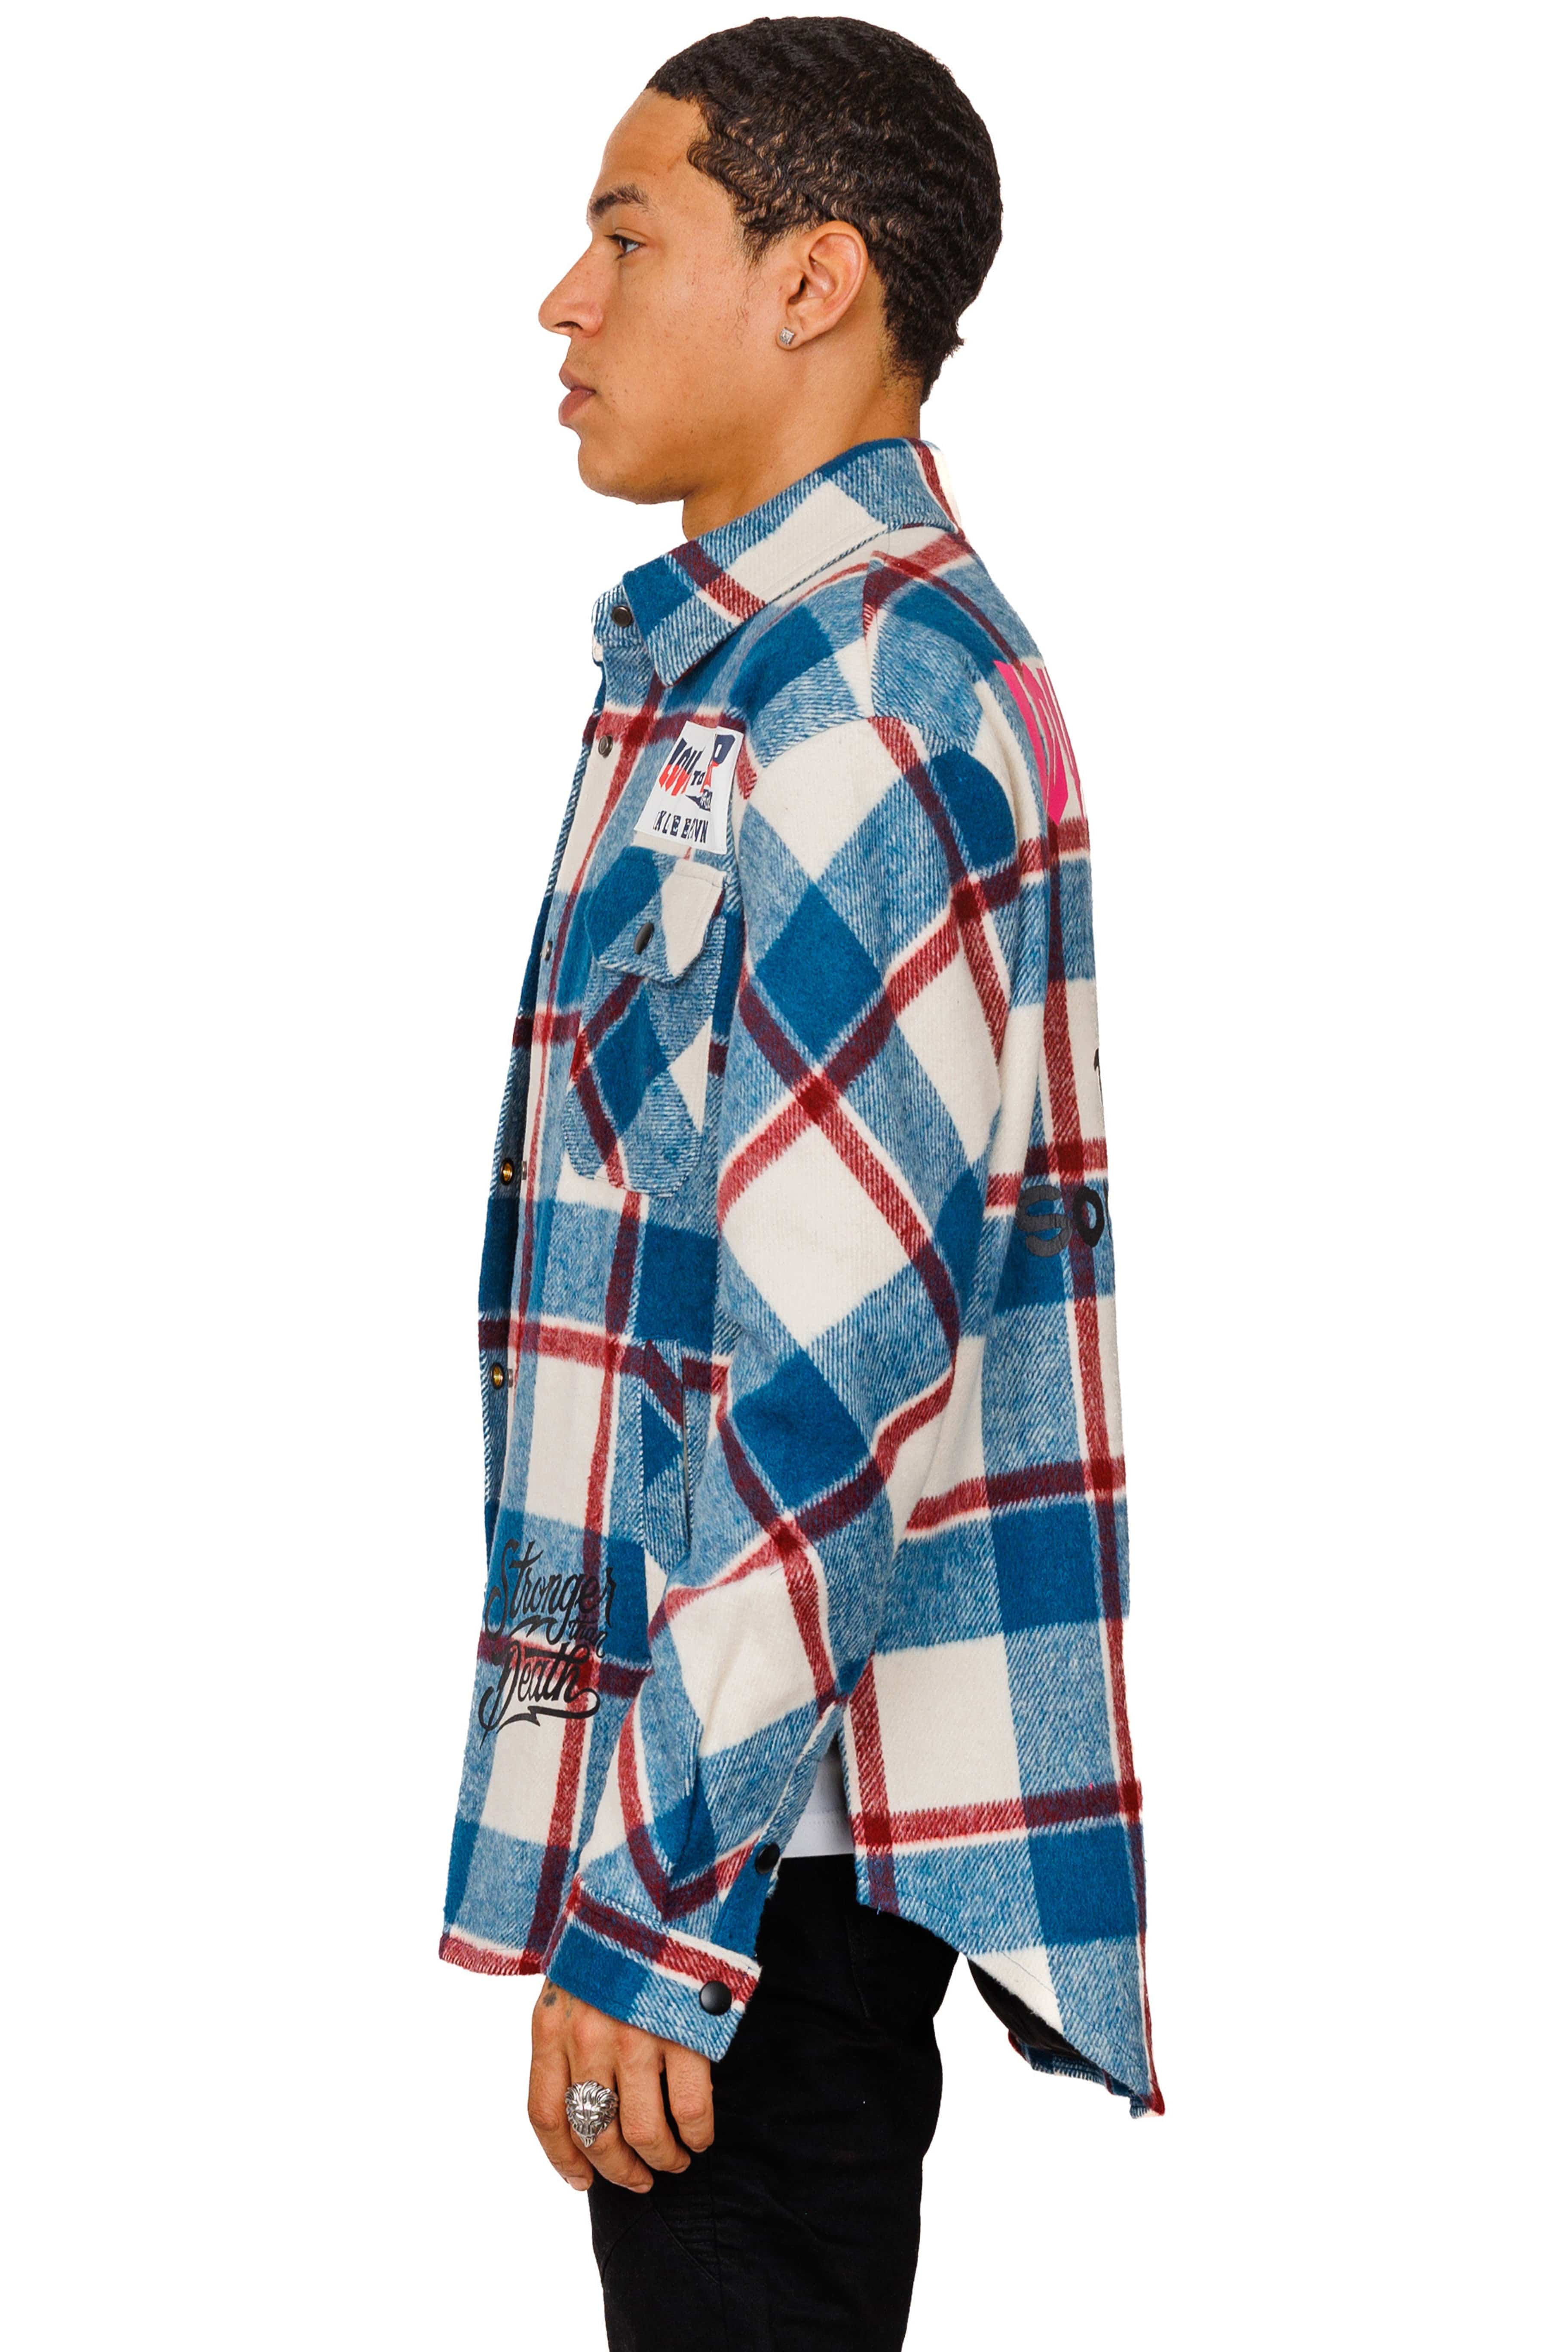 KLEEP Men's Shirt SINOPER Men's premium heavy flannel jacket type shirt